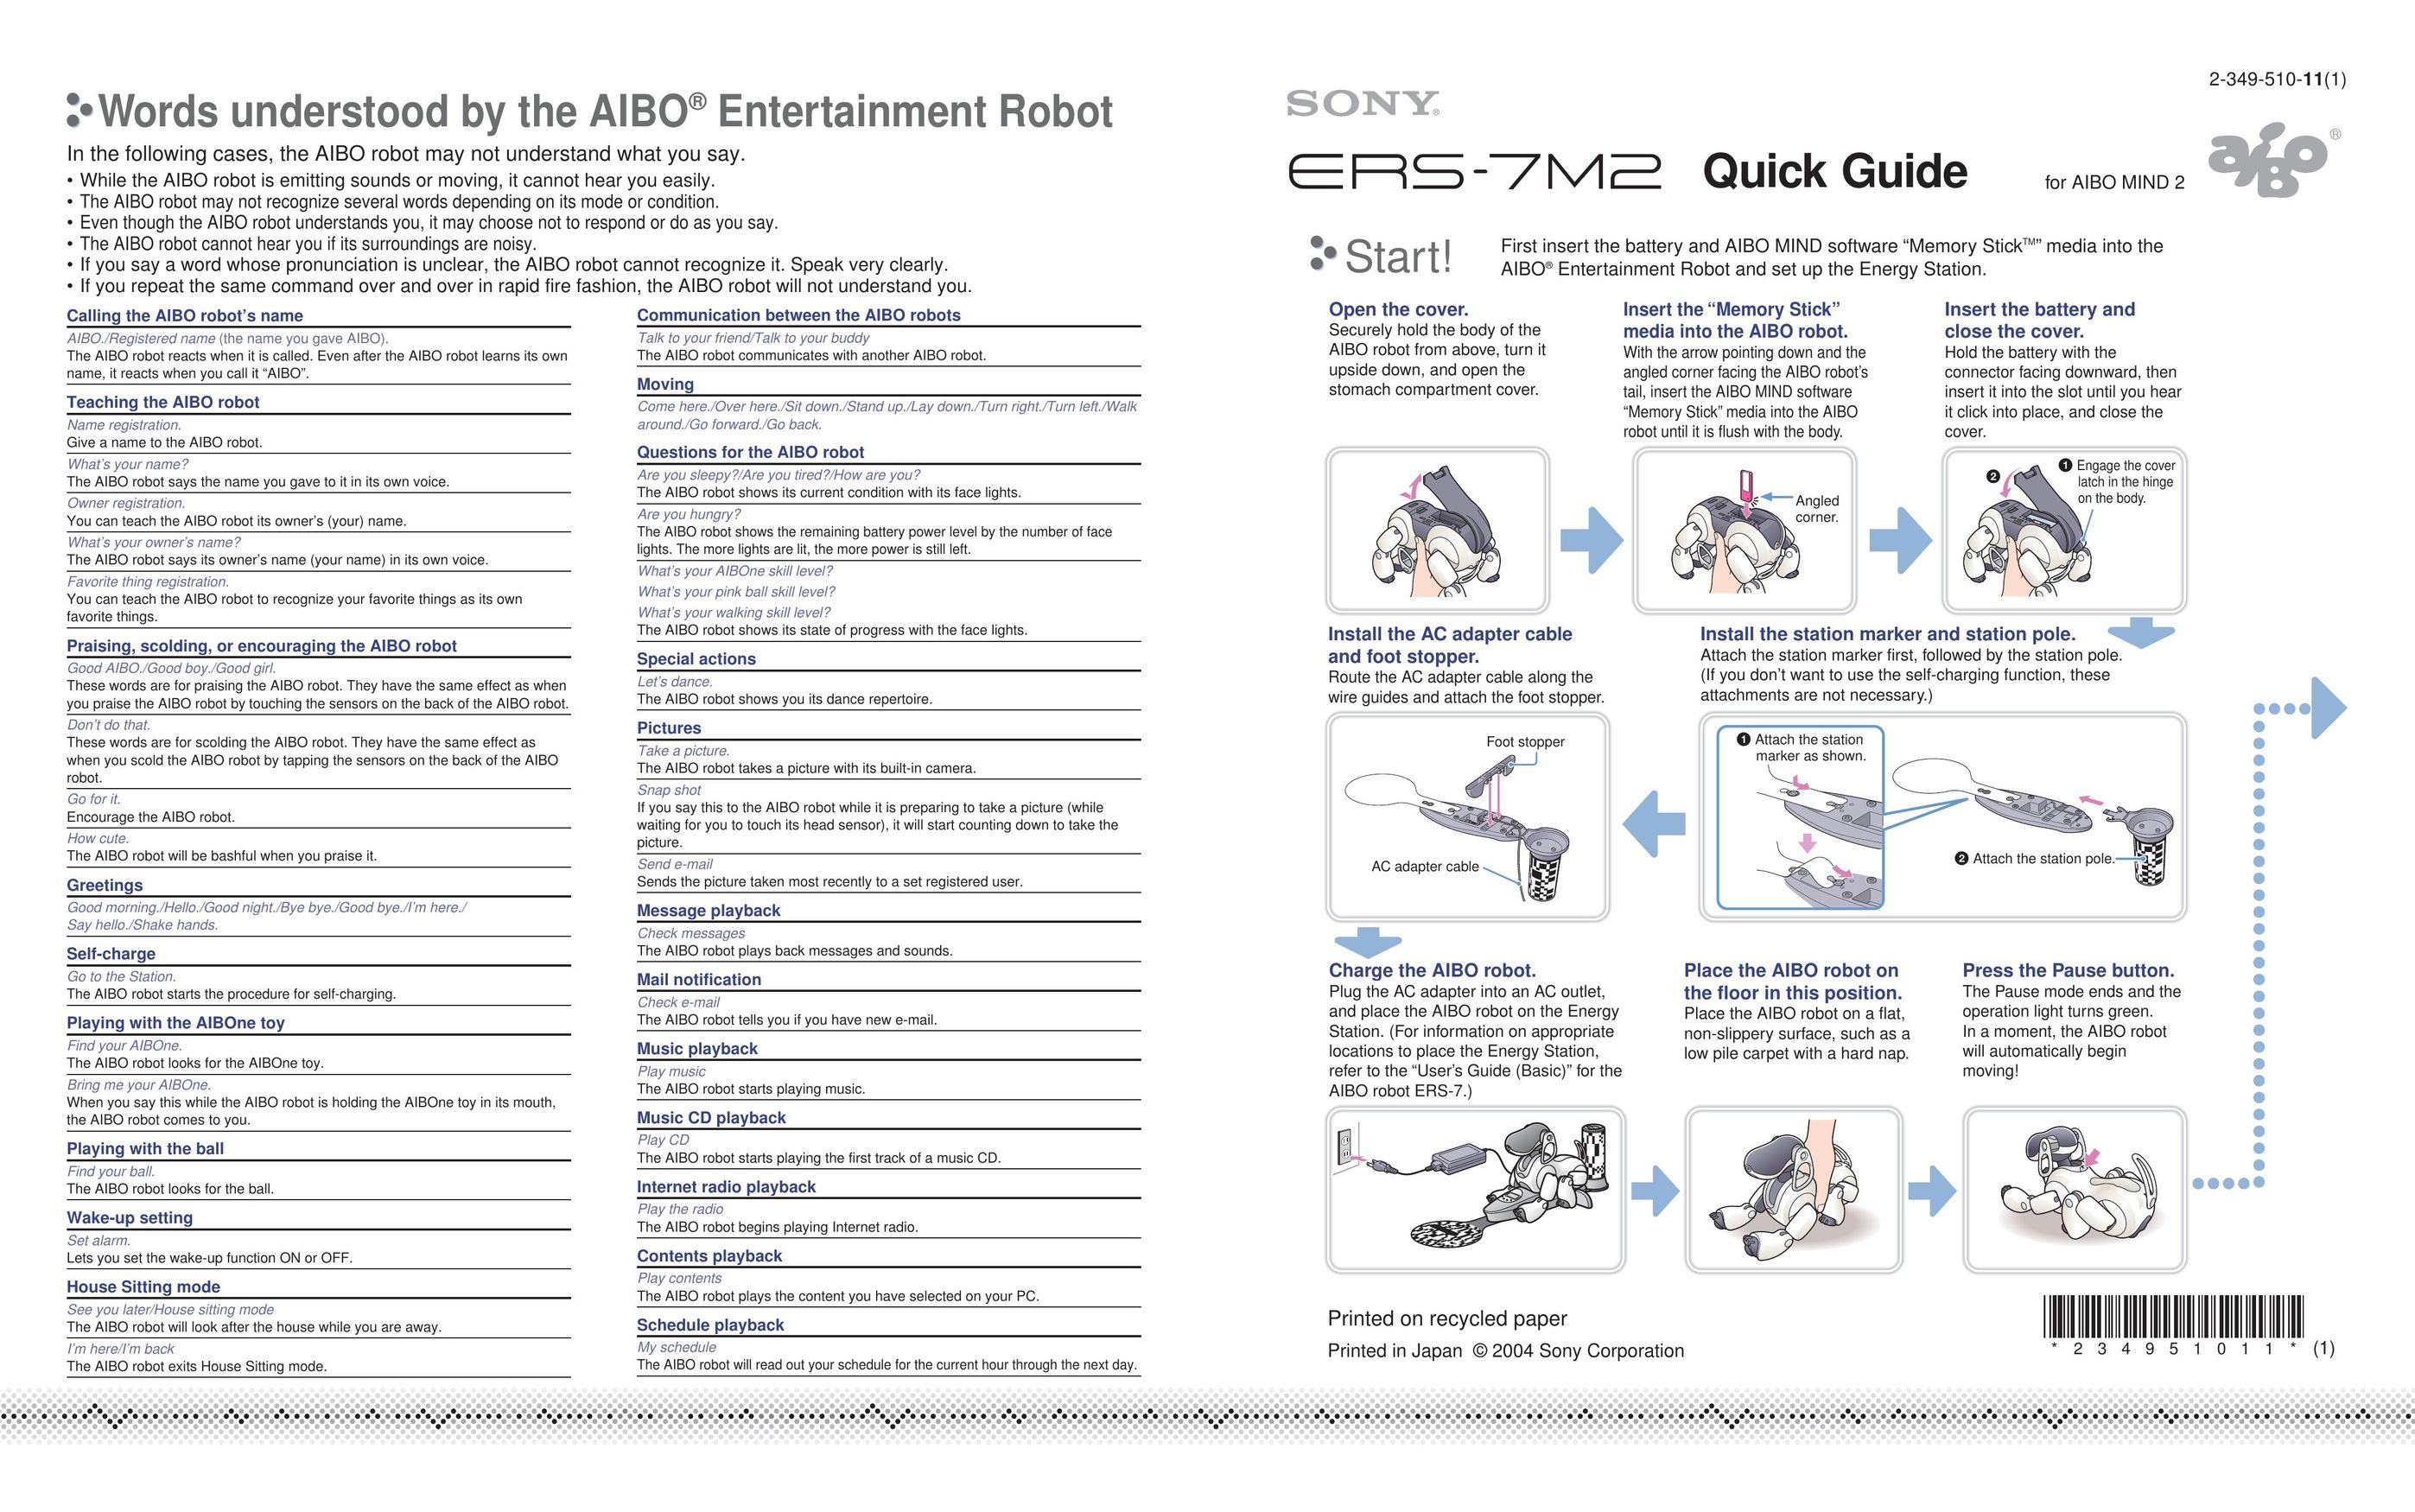 Sony AIBO MIND 2 Robotics User Manual